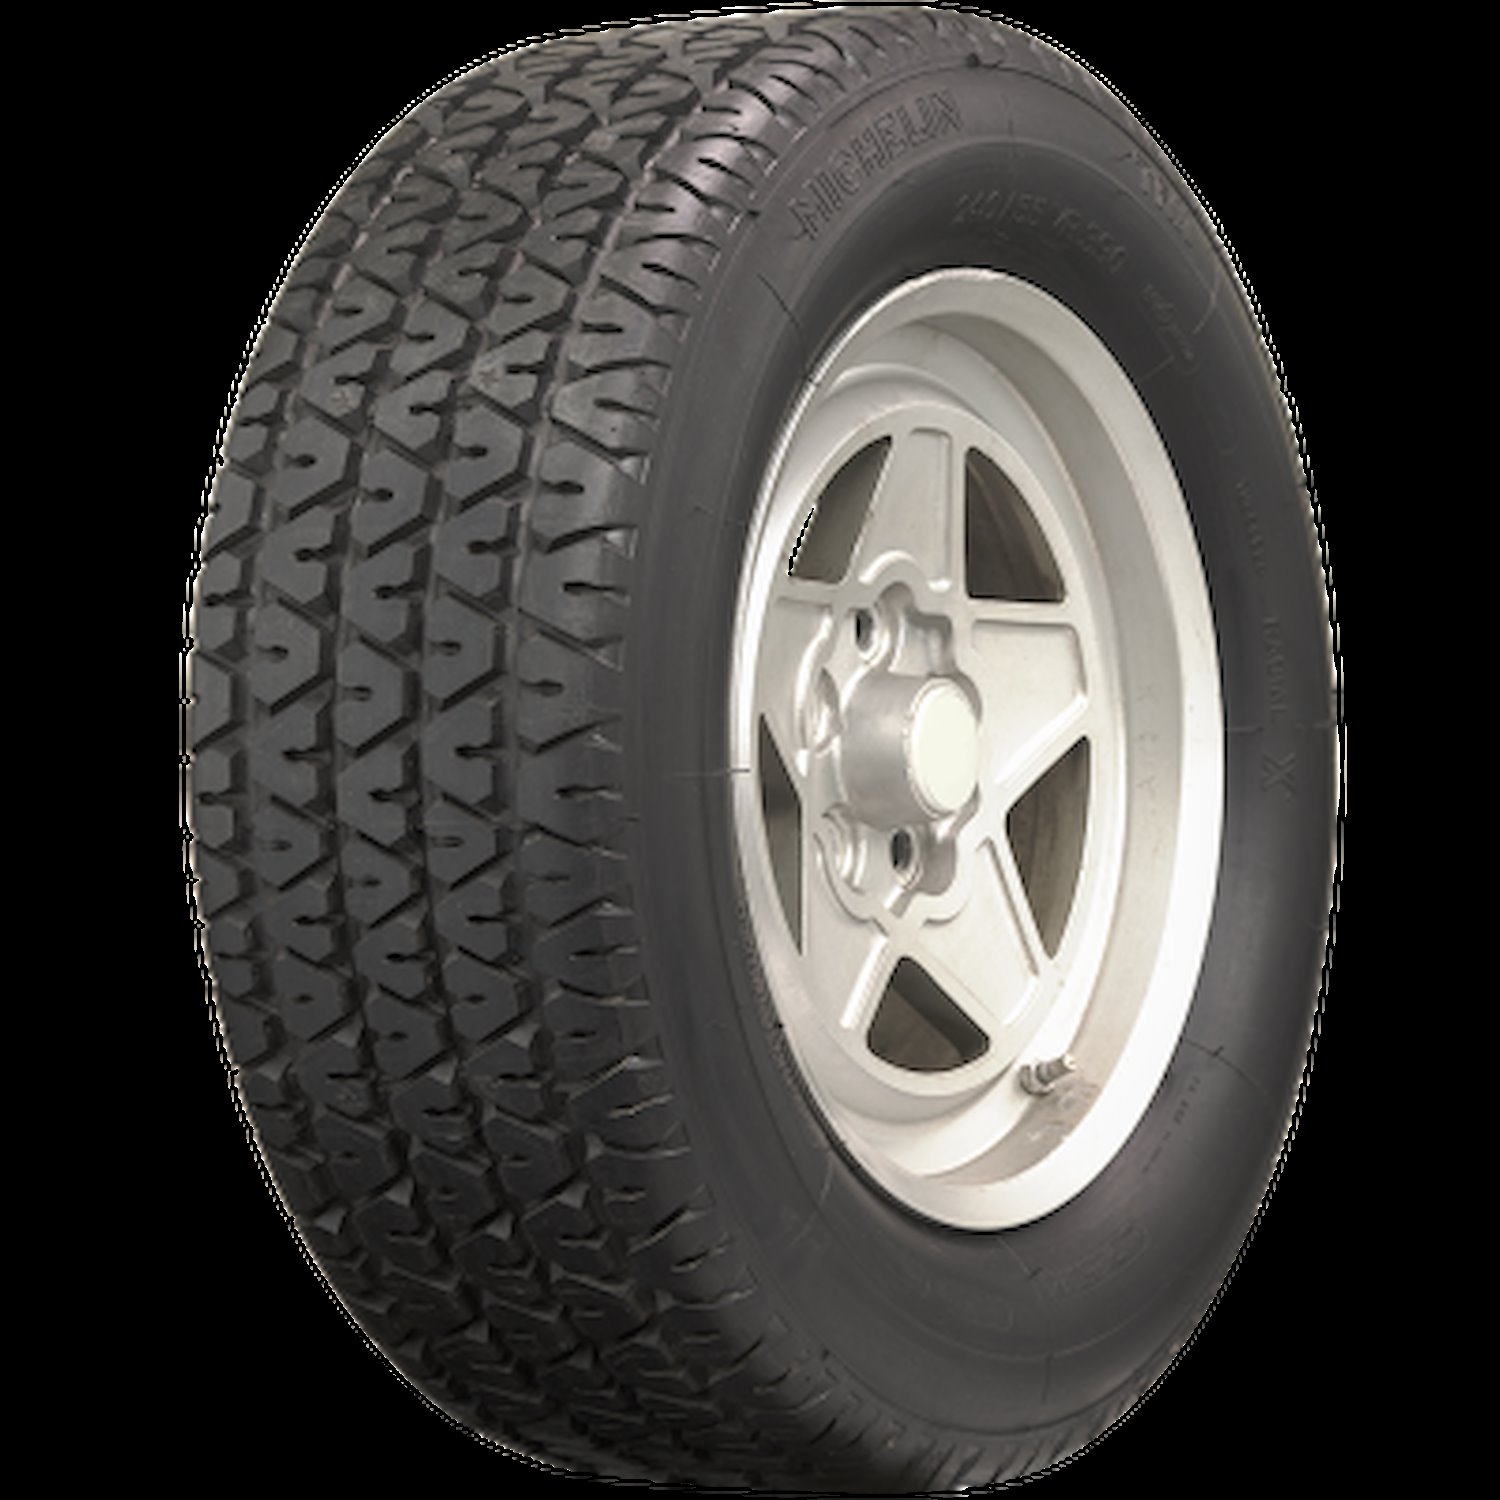 631946 Tire, Michelin TRX, 210/55VR390 91V